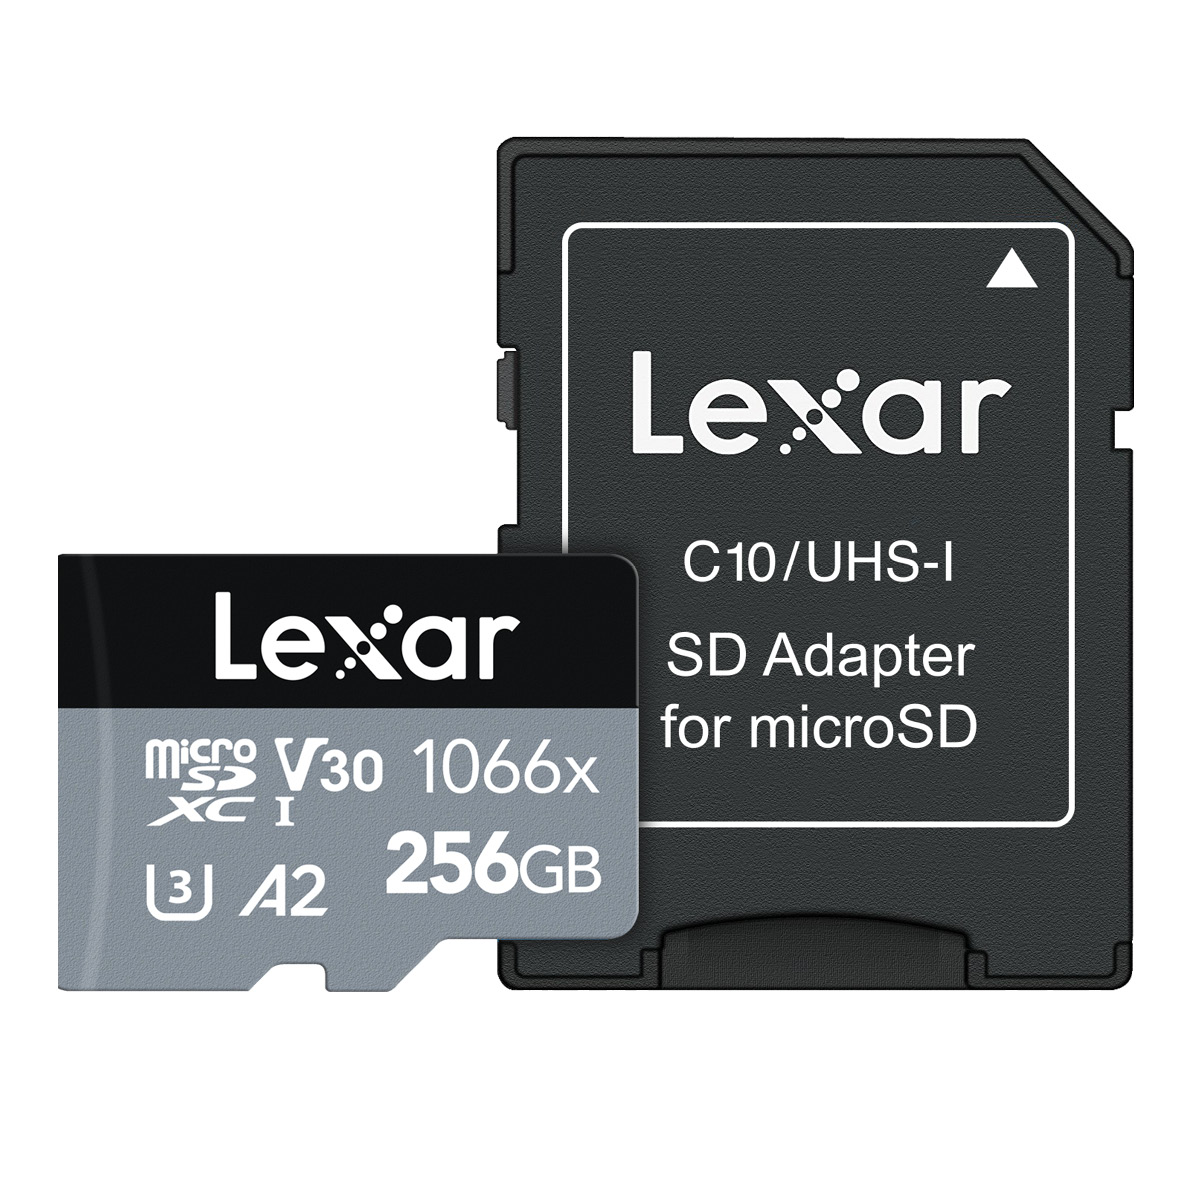 Lexar 256 GB Micro SDXC Pro Silver 1066x